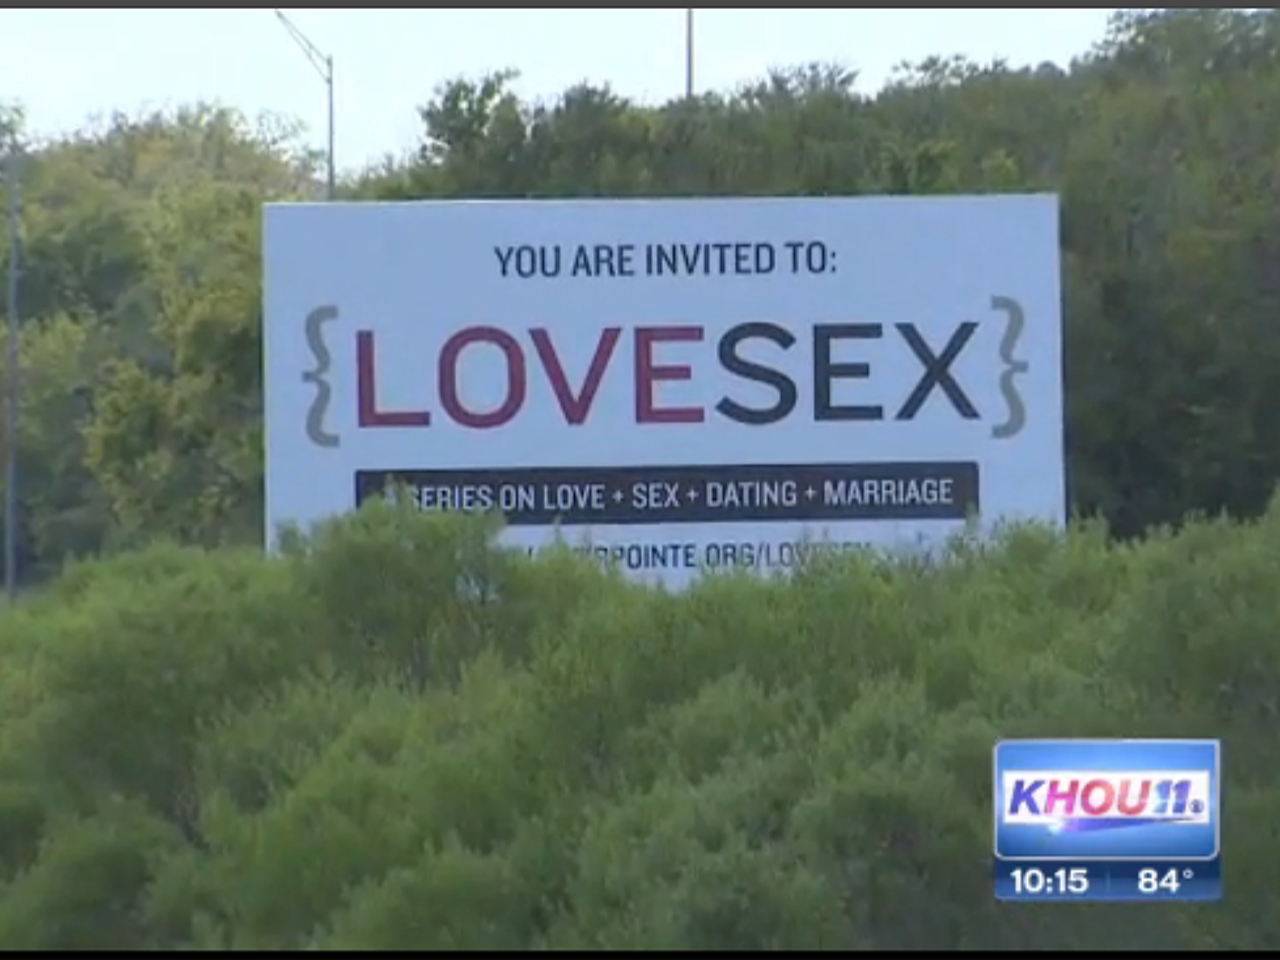 Texas Church Surprises With Love Sex Sermon Series Cbs News